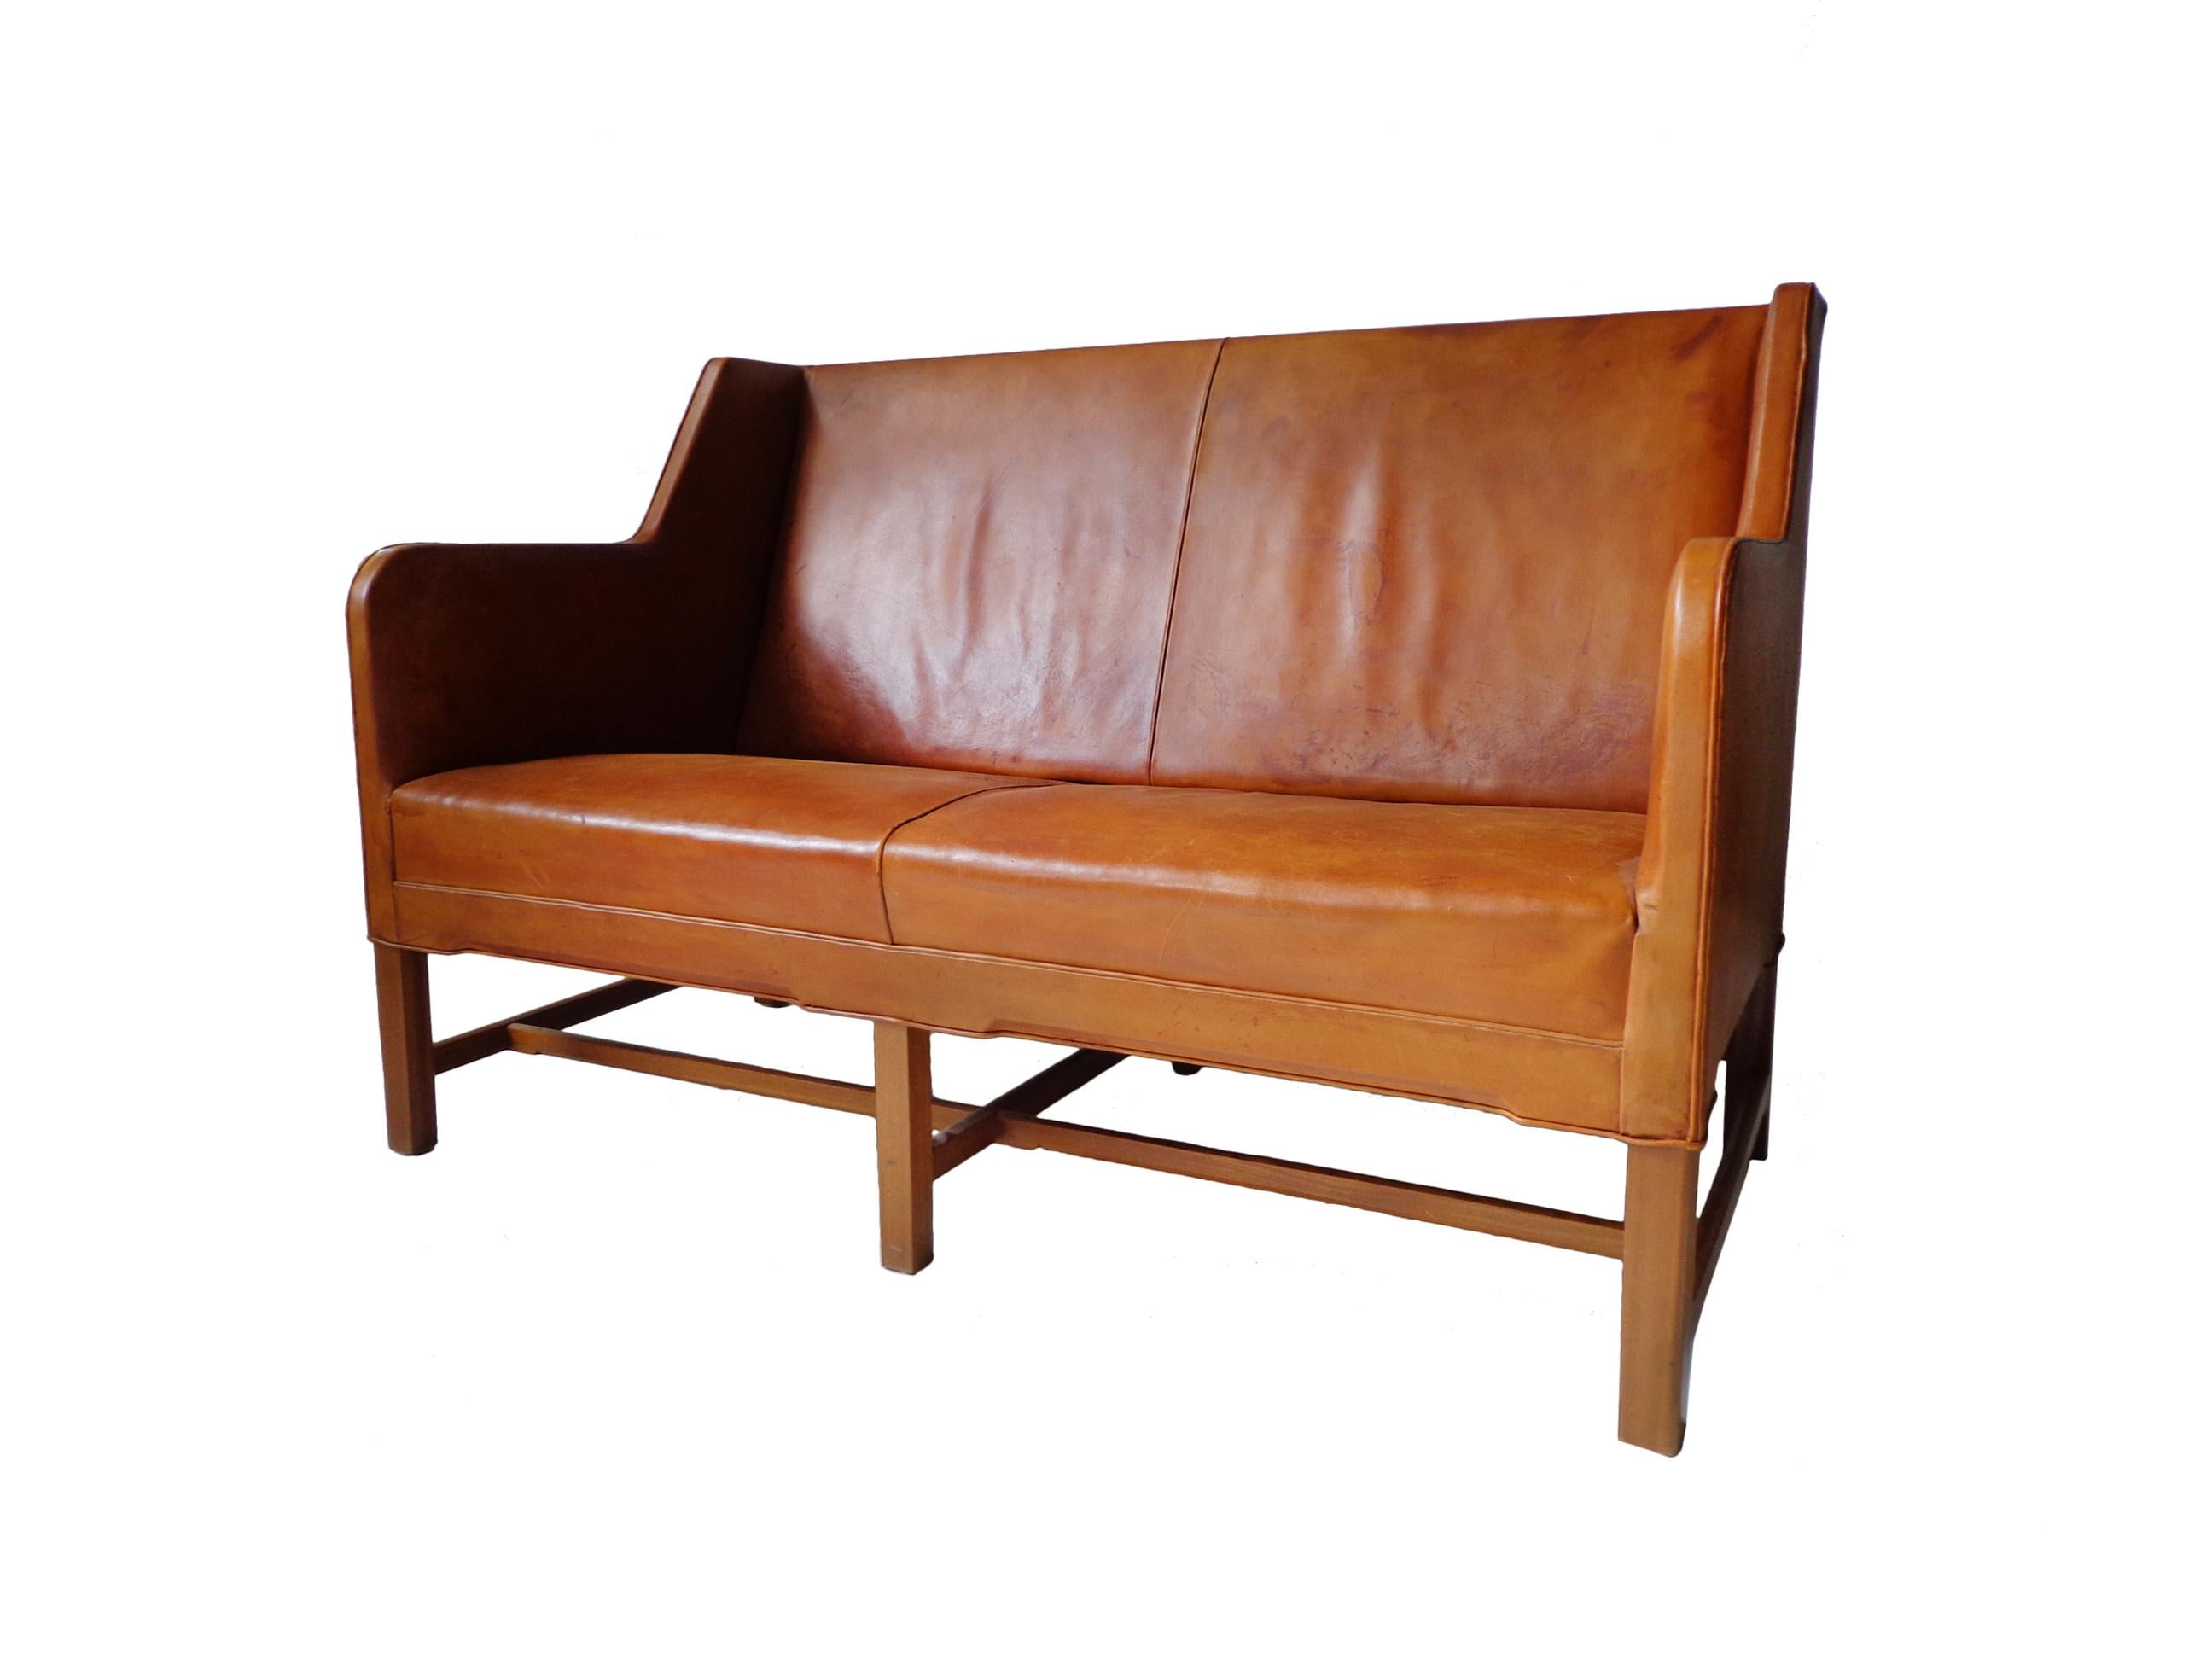 Scandinavian Modern Sofa Model 5011 in Original Cognac Leather by Kaare Klint for Rud Rasmussen For Sale